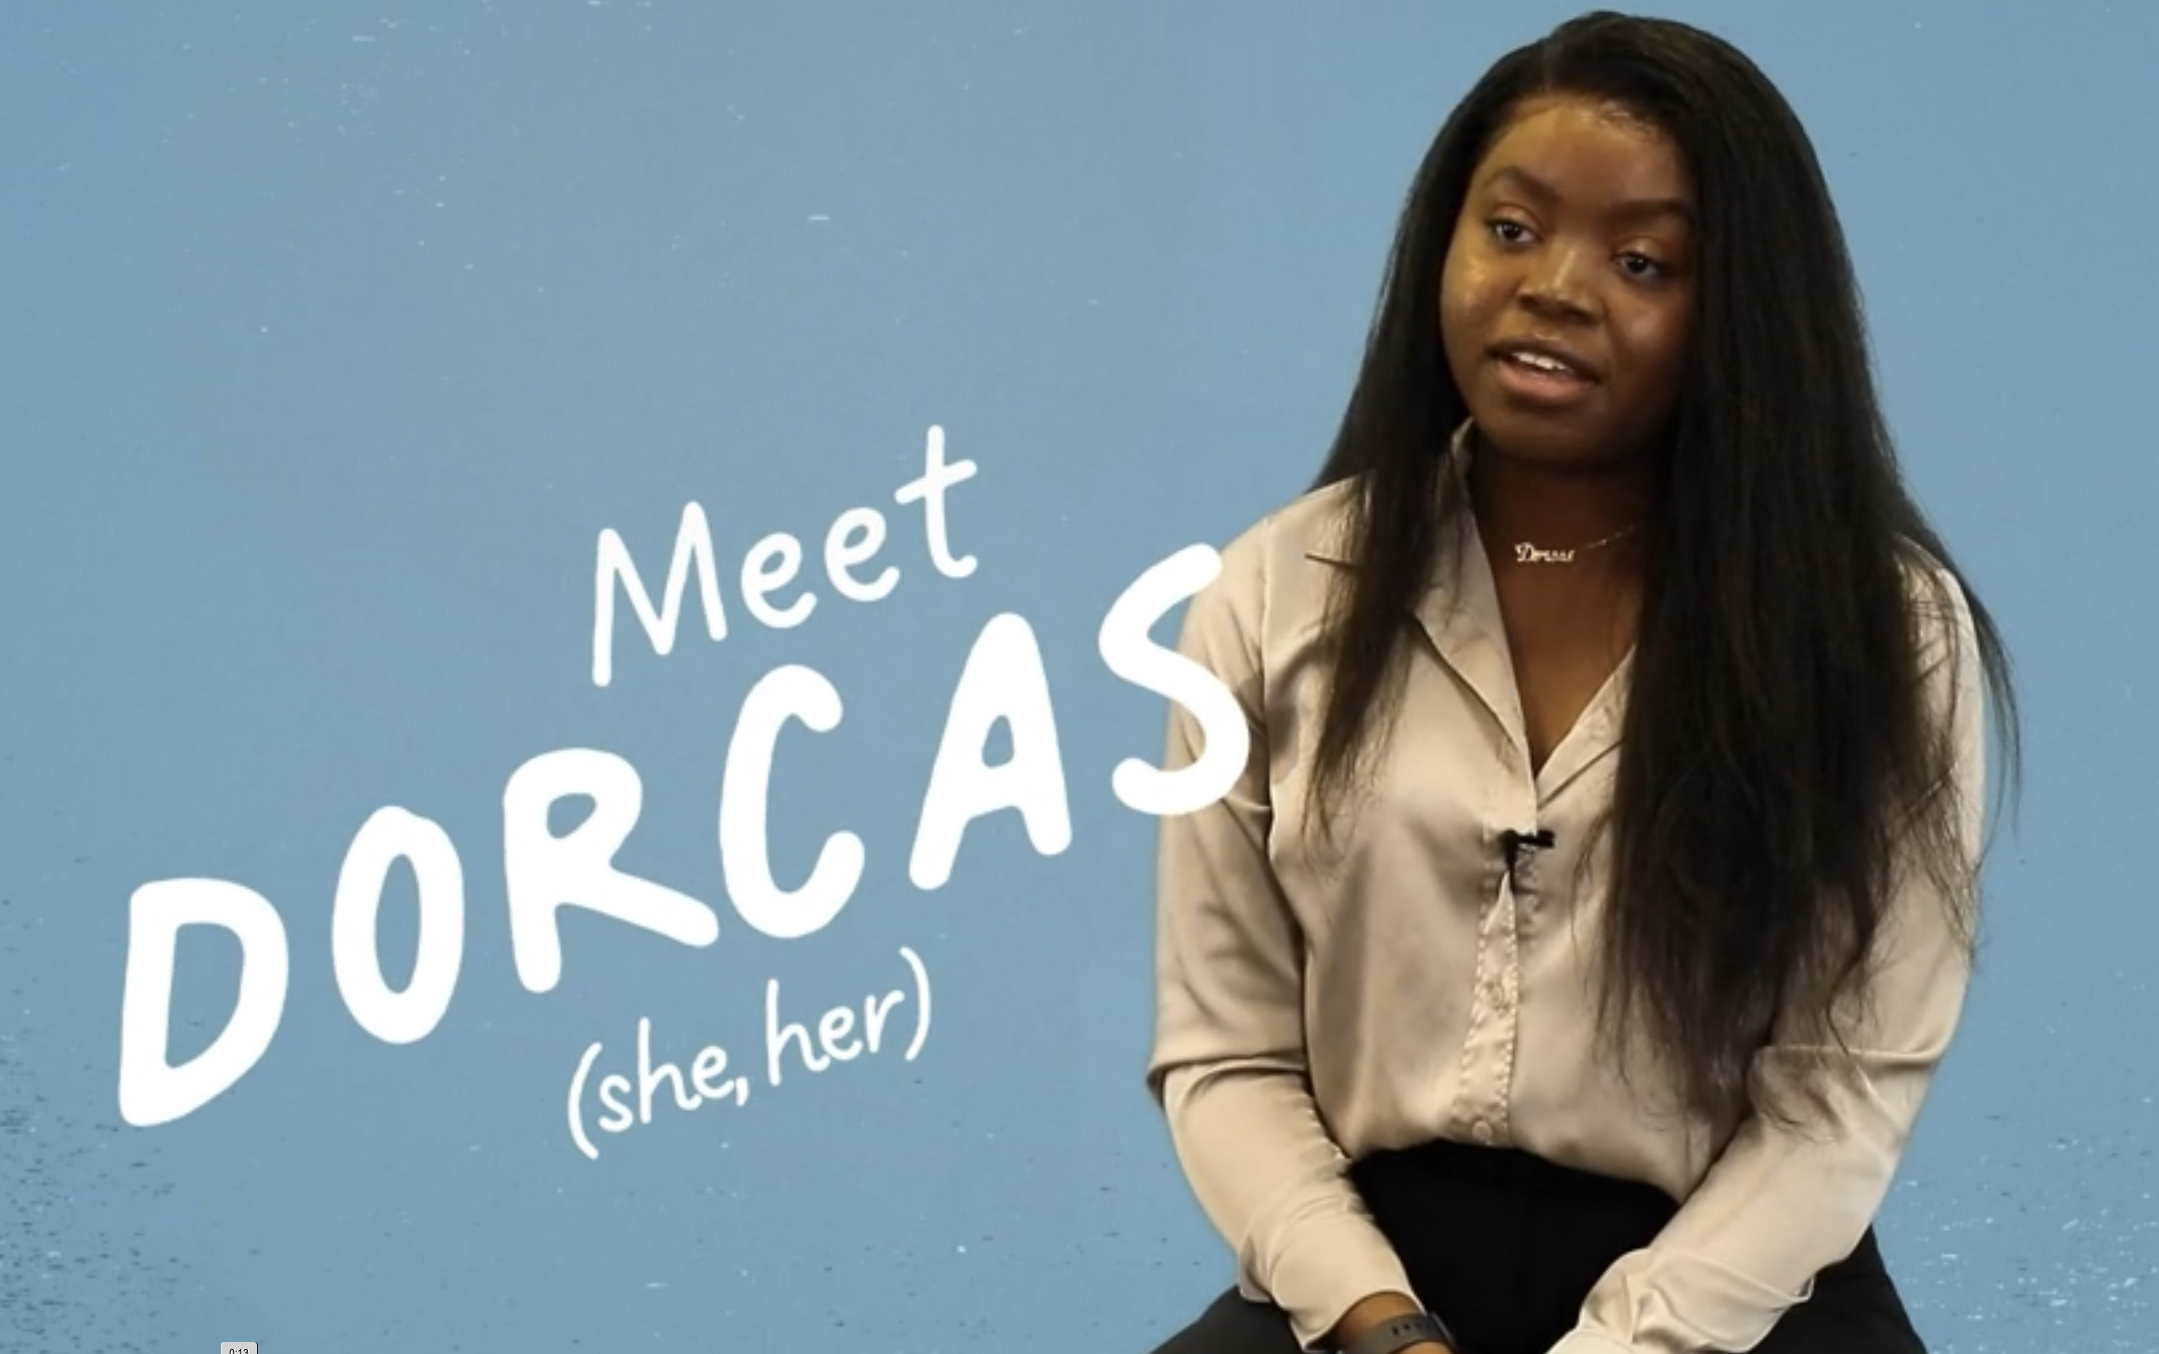 Dorcas (she/her) is majoring in psychology.